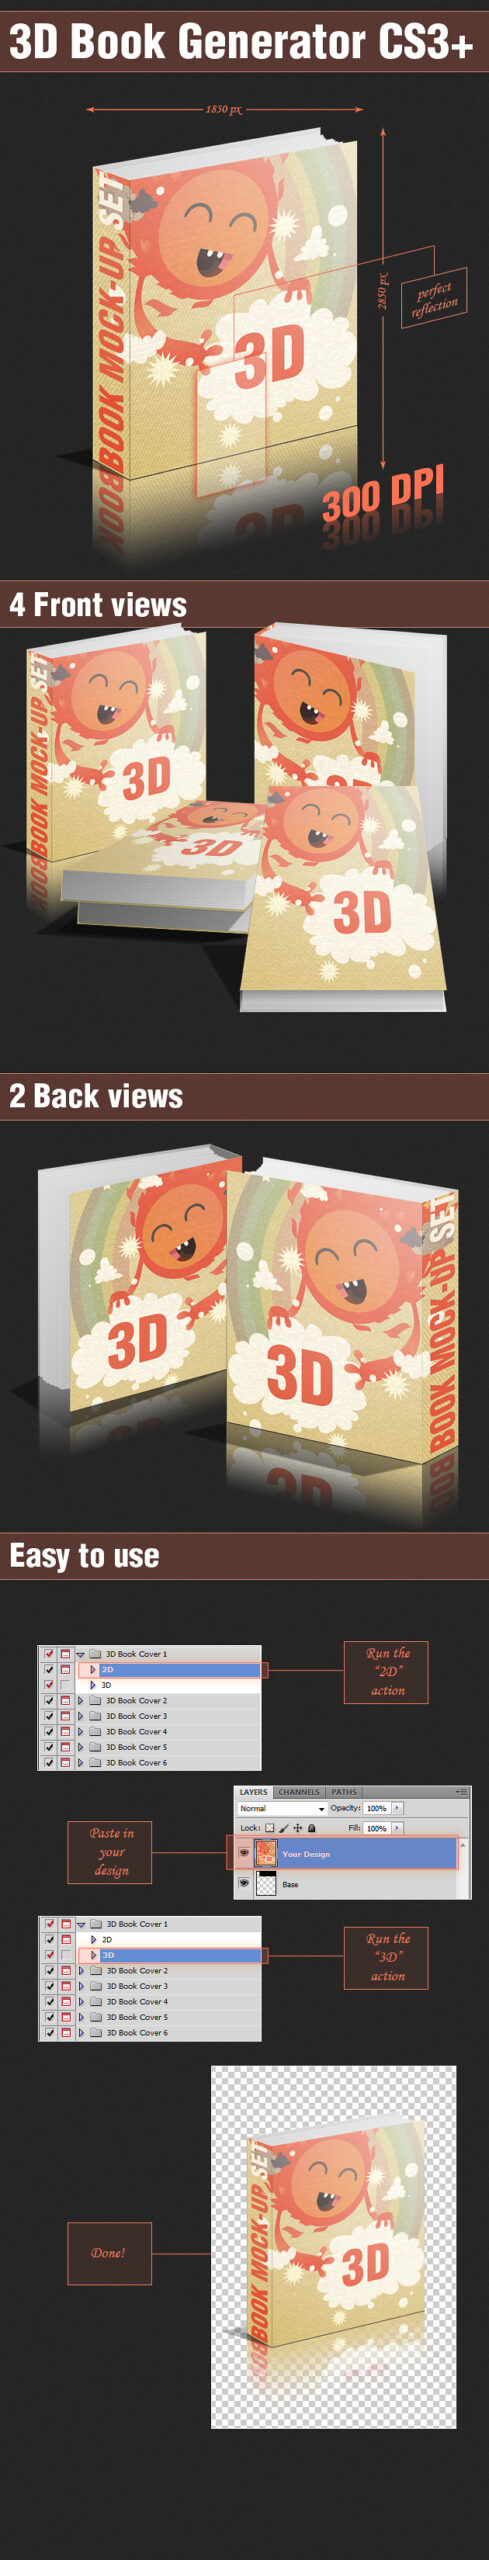 دانلود اکشن فتوشاپ جلد کتاب 3D Book Generator PS Actions